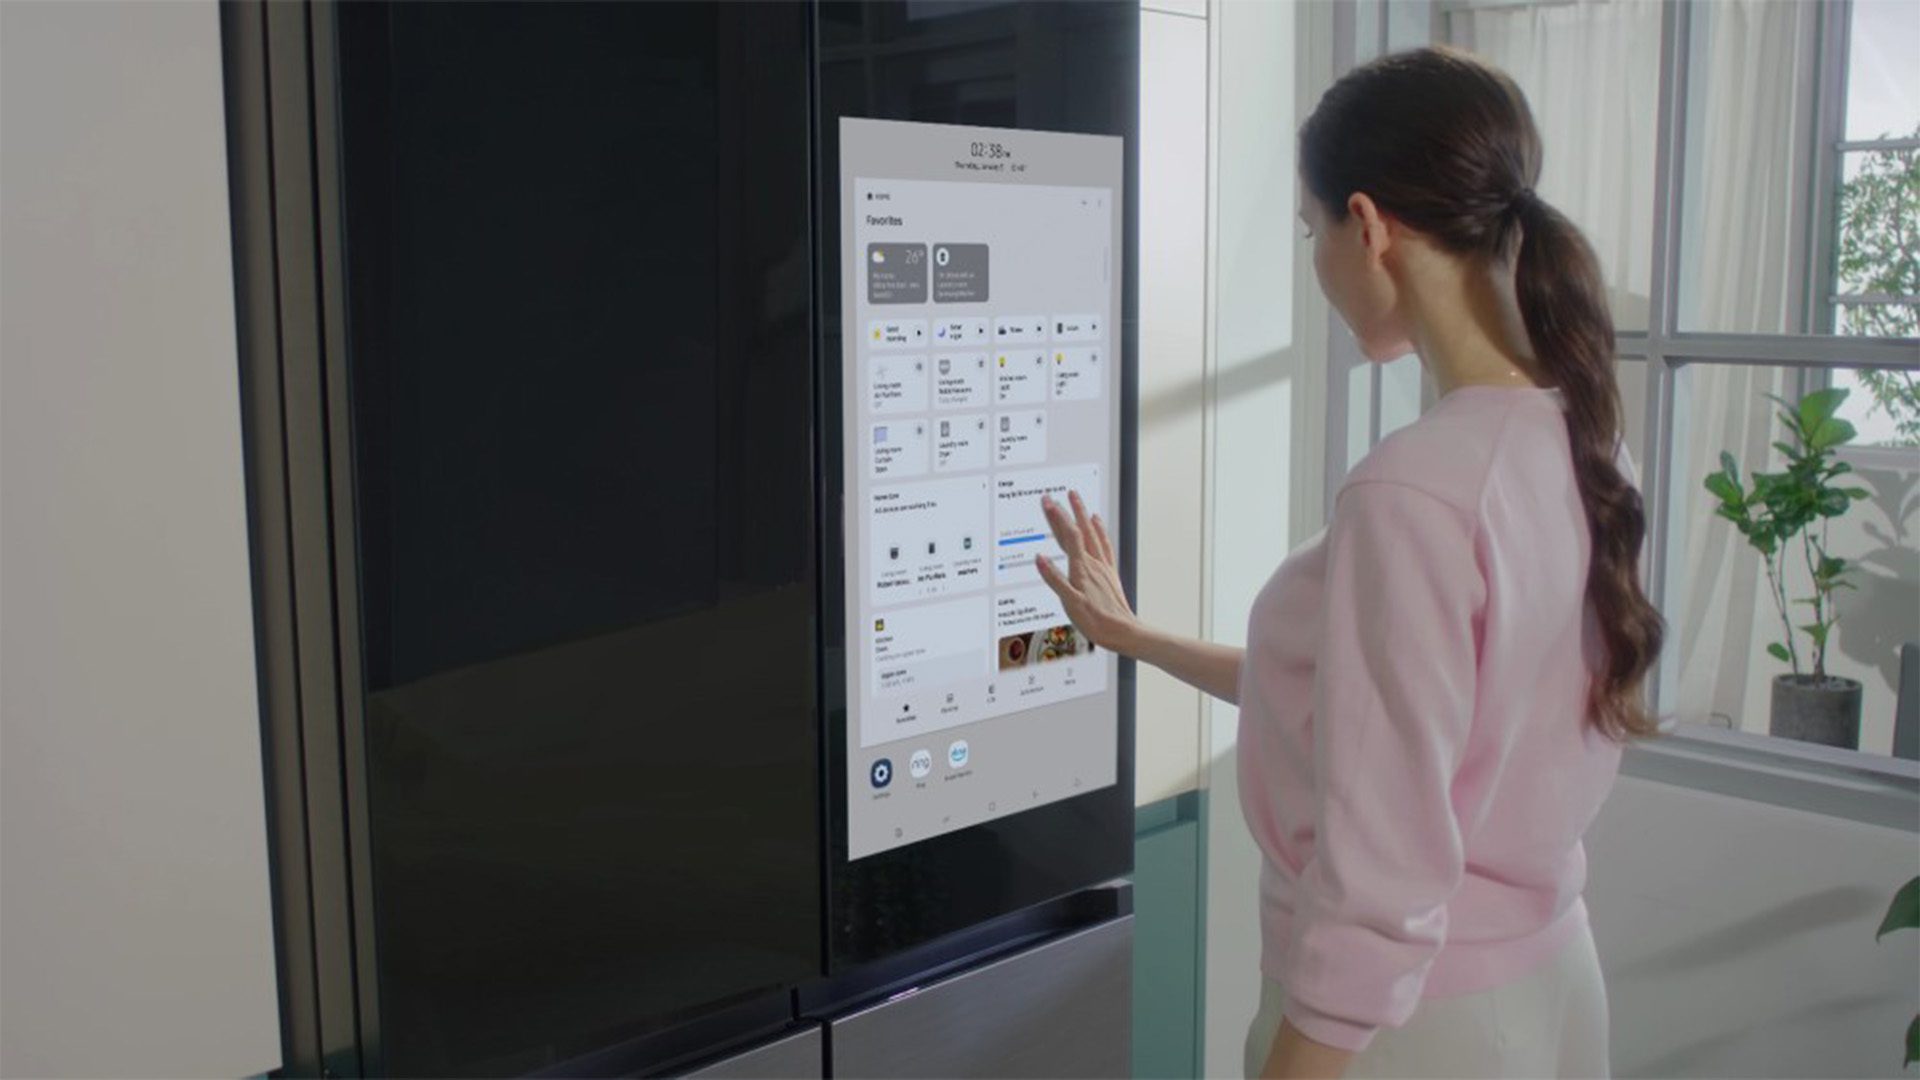 Samsung's custom refrigerator